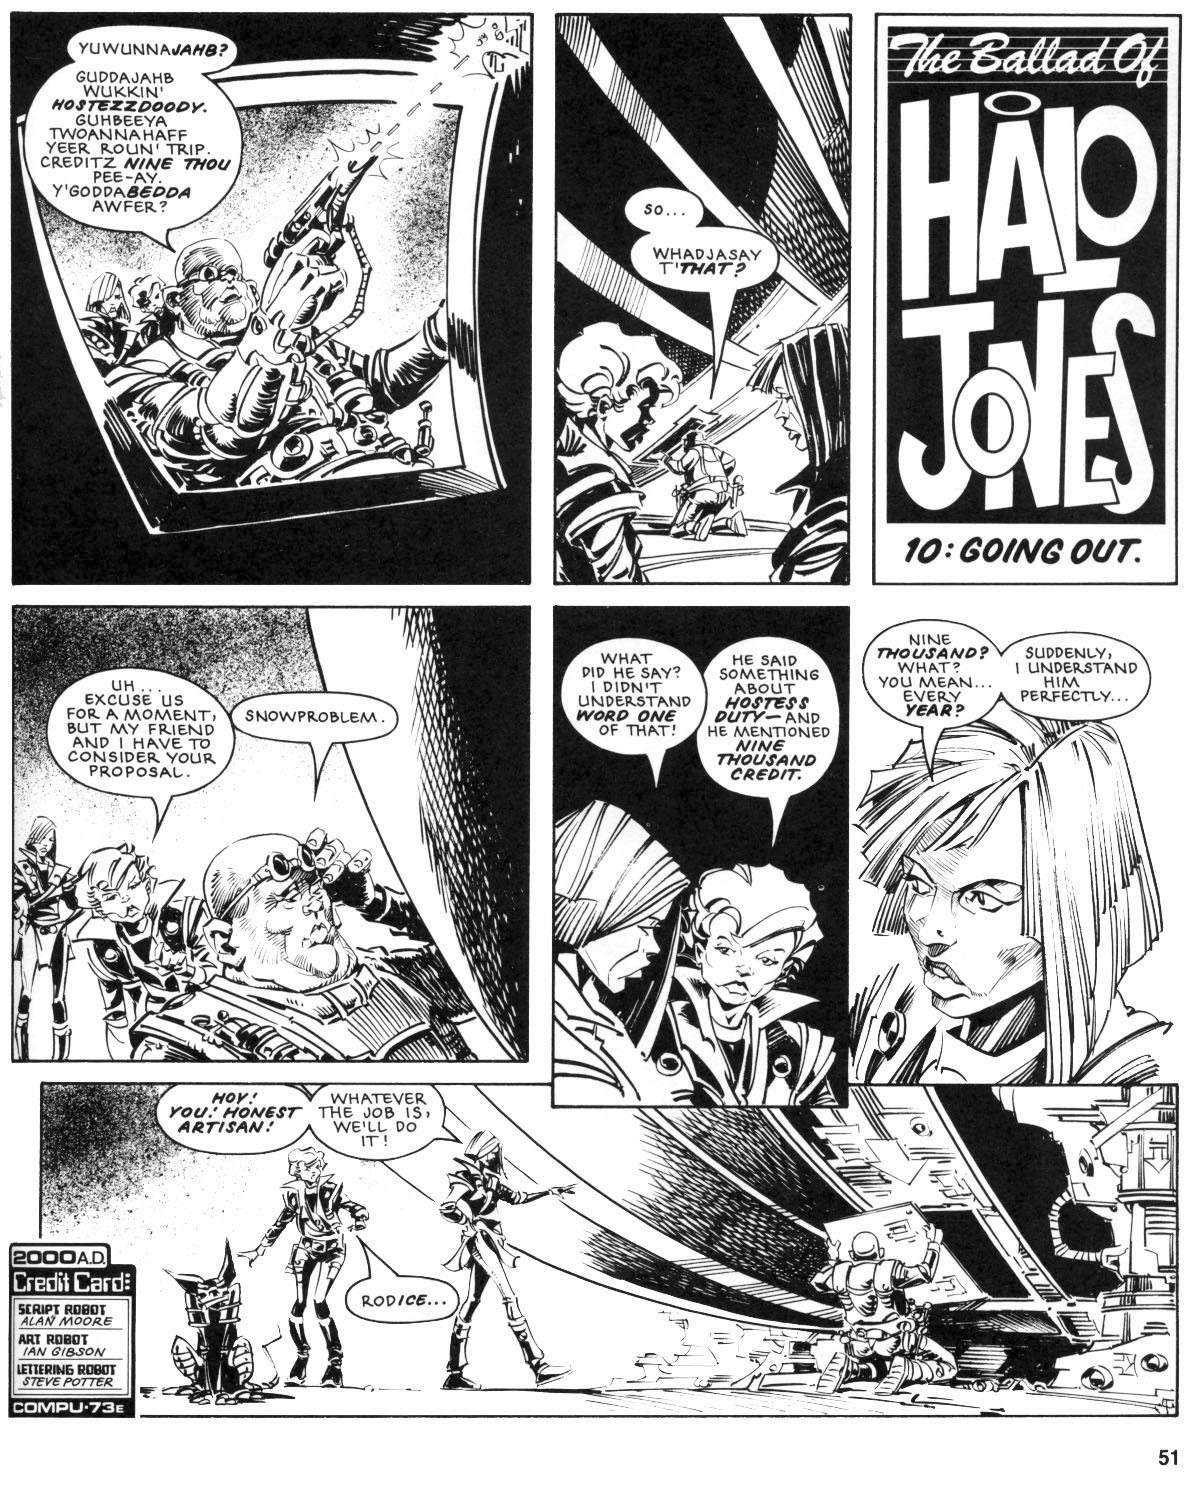 Read online The Ballad of Halo Jones (1986) comic -  Issue #1 - 48